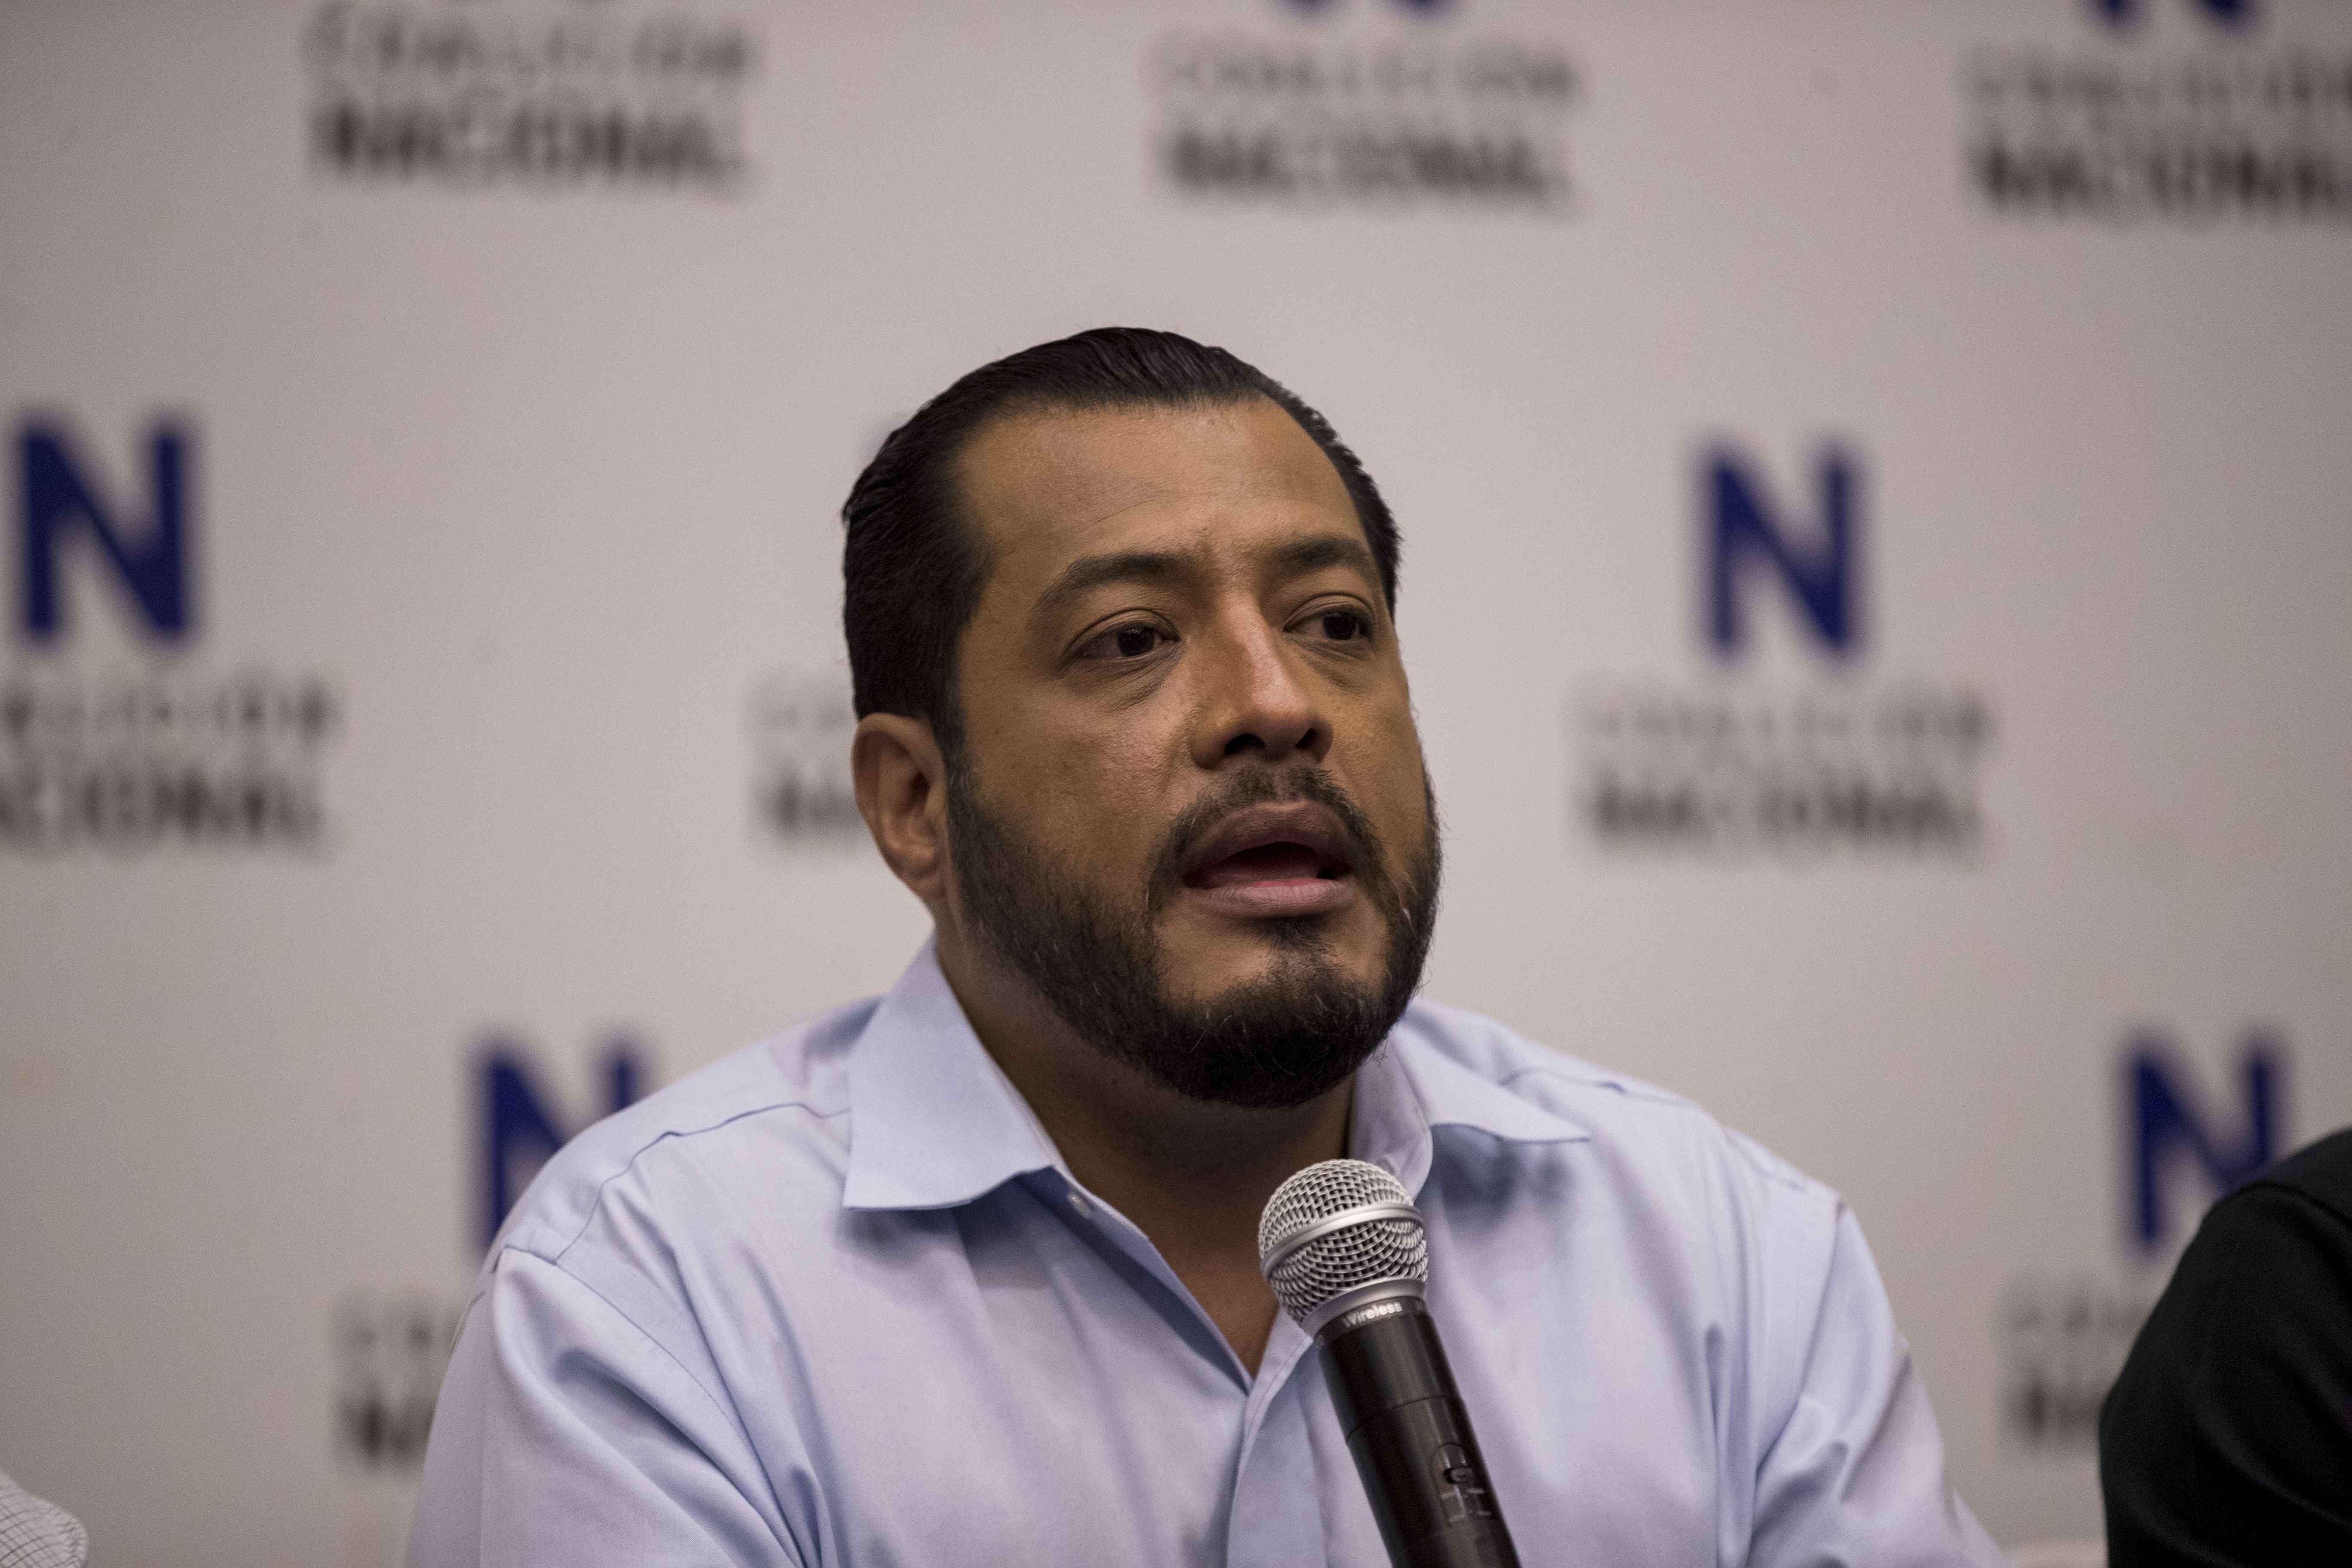 El preso político del régimen de Nicaragua, Daniel Maradiaga, anunció el inicio de una huelga de hambre
